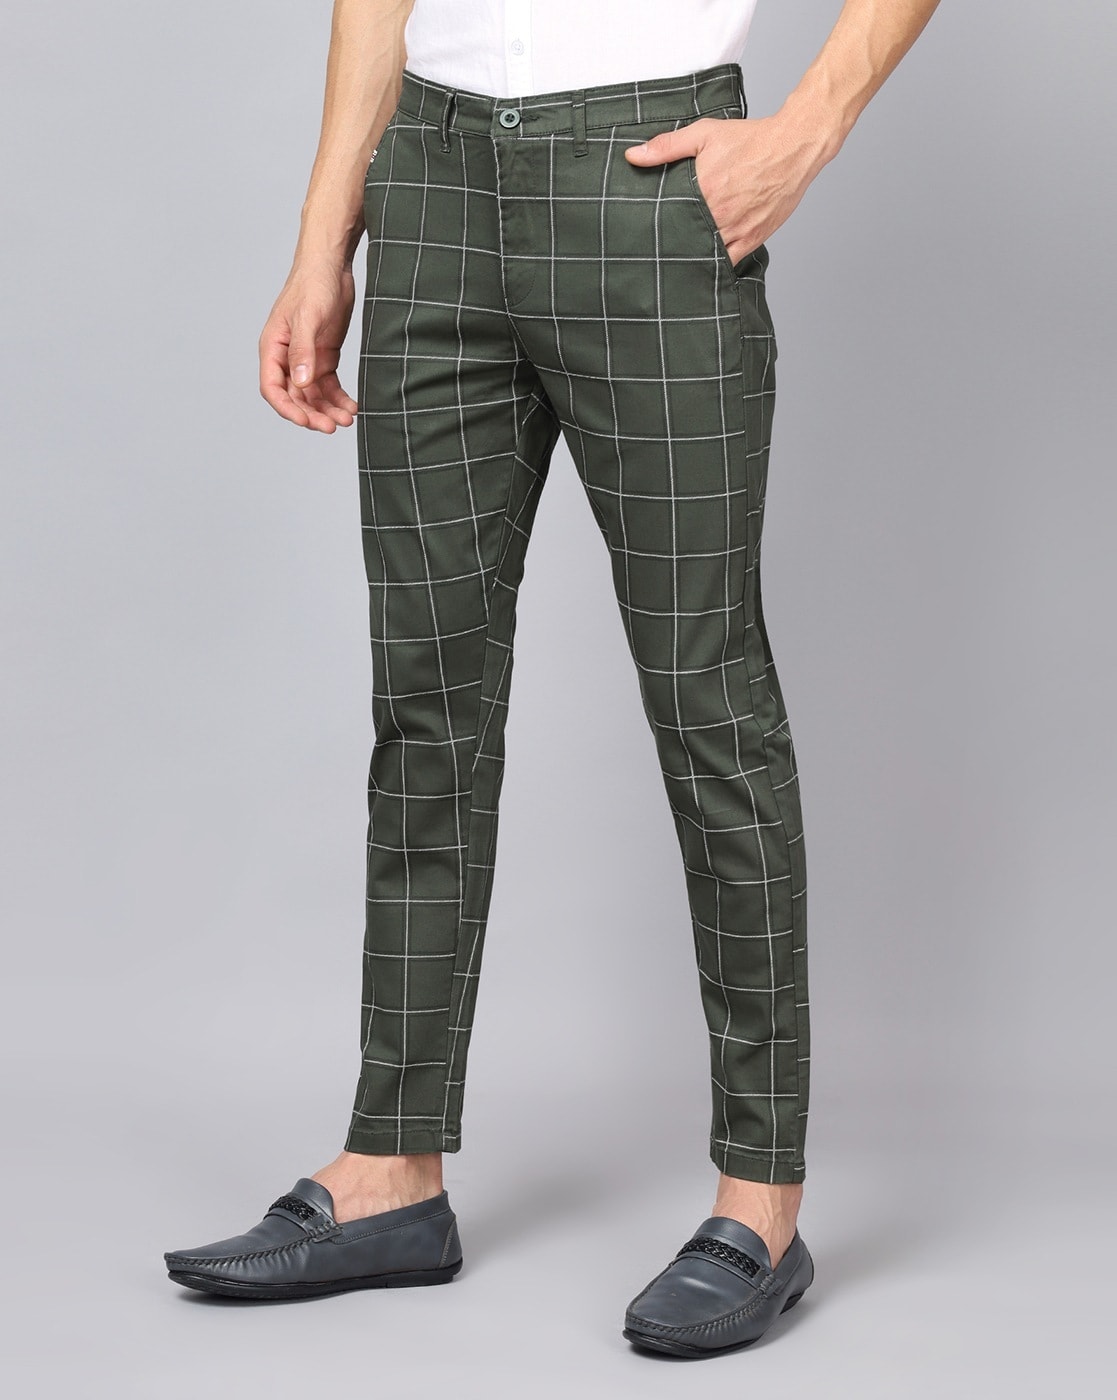 Green Checks Trousers - Buy Green Checks Trousers online in India